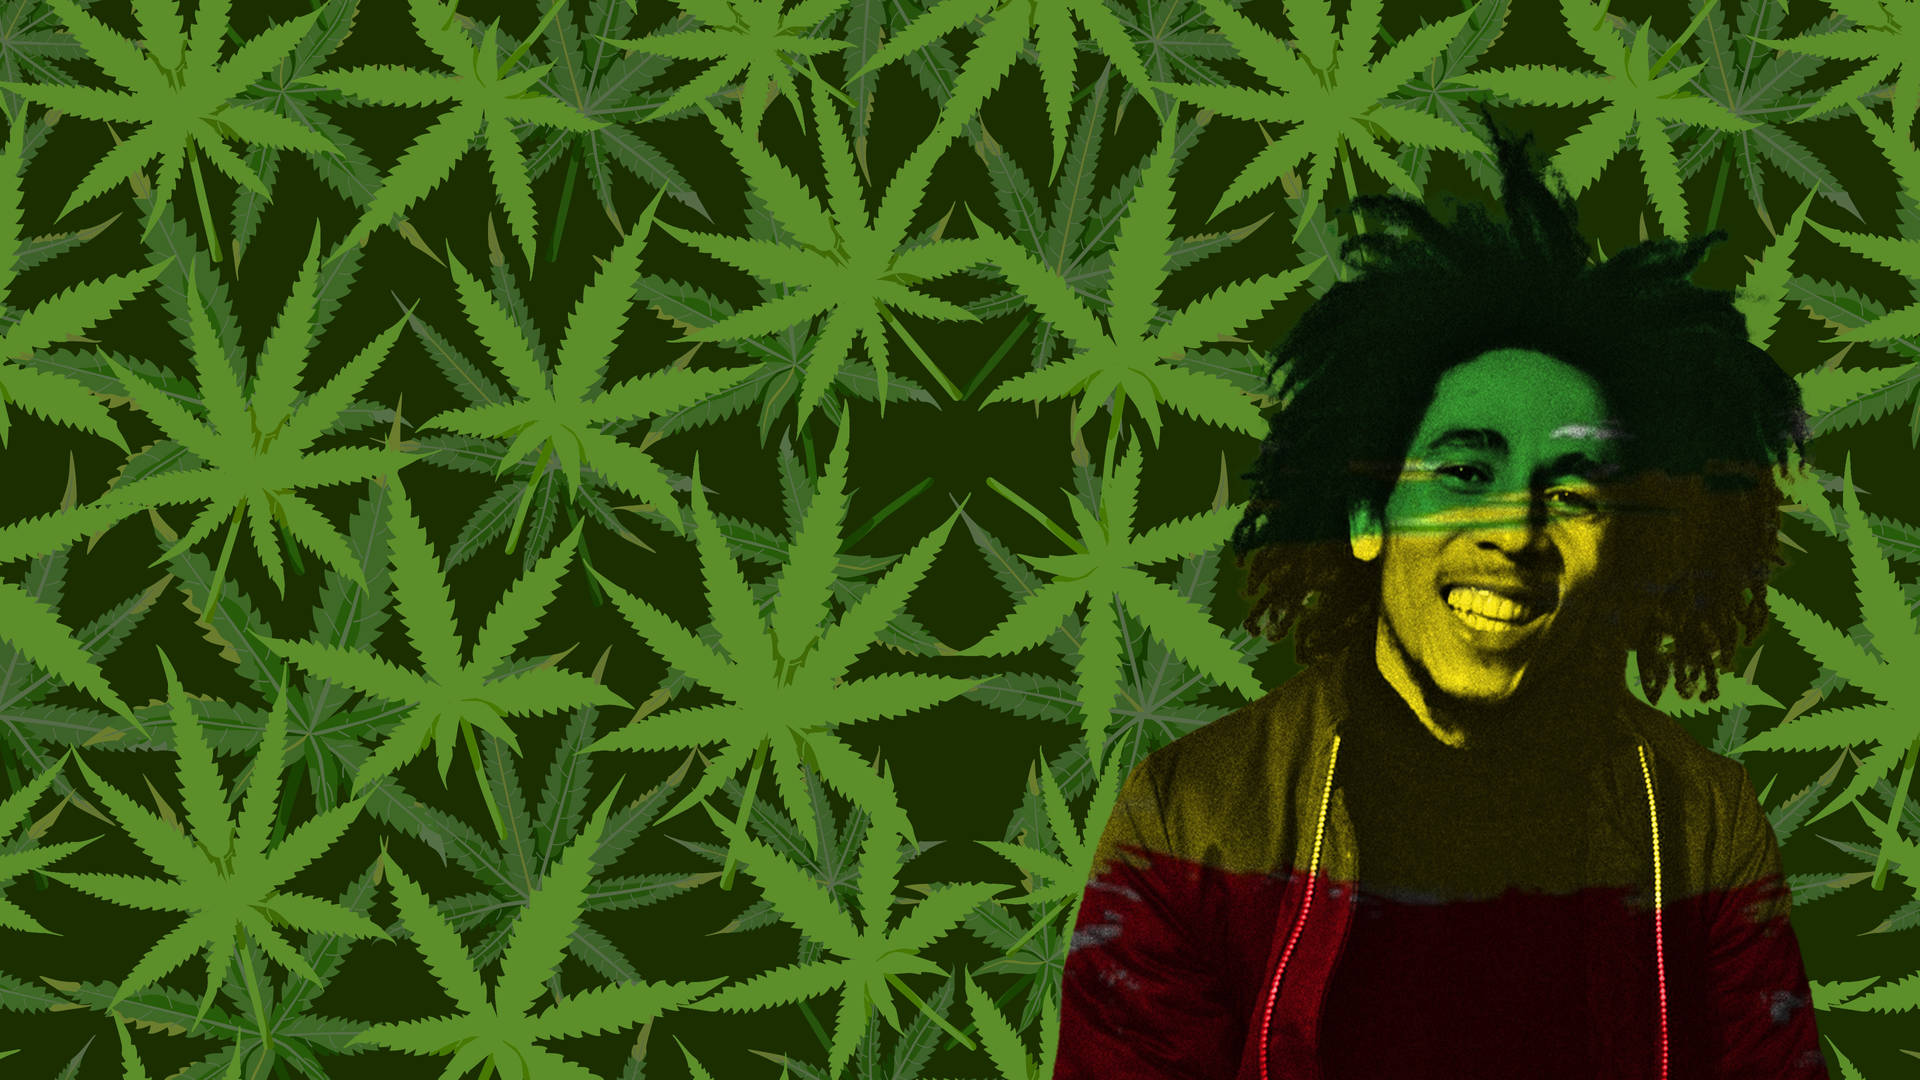 Bob Marley 3840 X 2160 Wallpaper